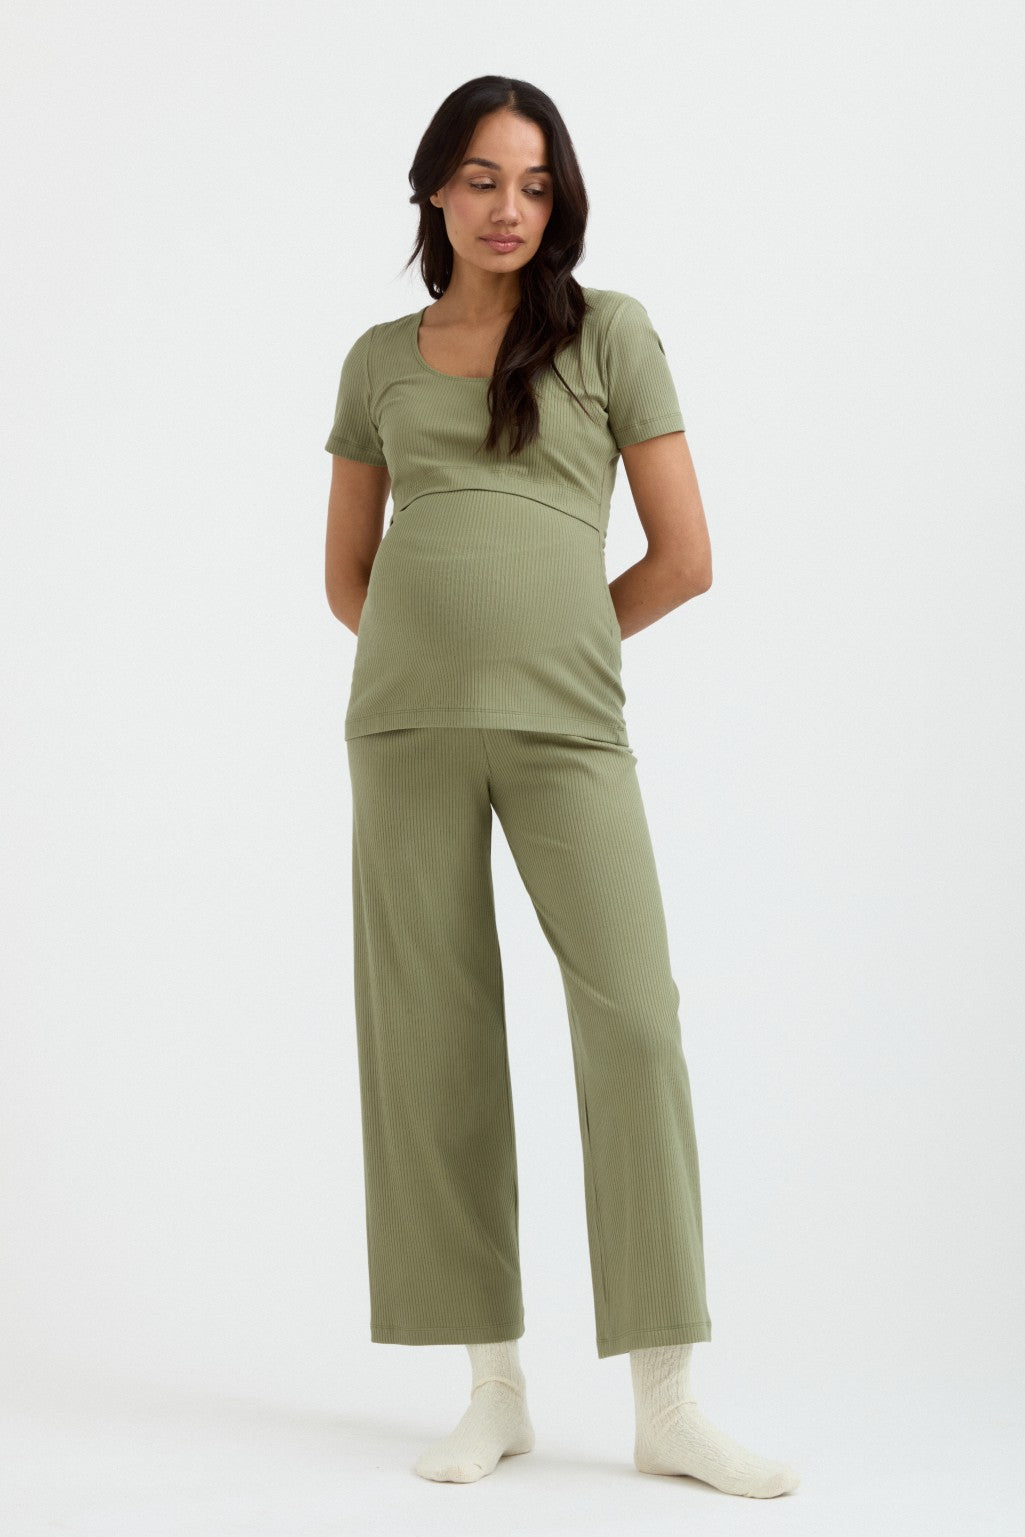 Women's Maternity Nursing Pajamas Set Zipper Breastfeeding Sleepwear Set  Soft Short Sleeve Tops with Long Pants 2 Piece Pregnancy Loose Loungewear  Pjs